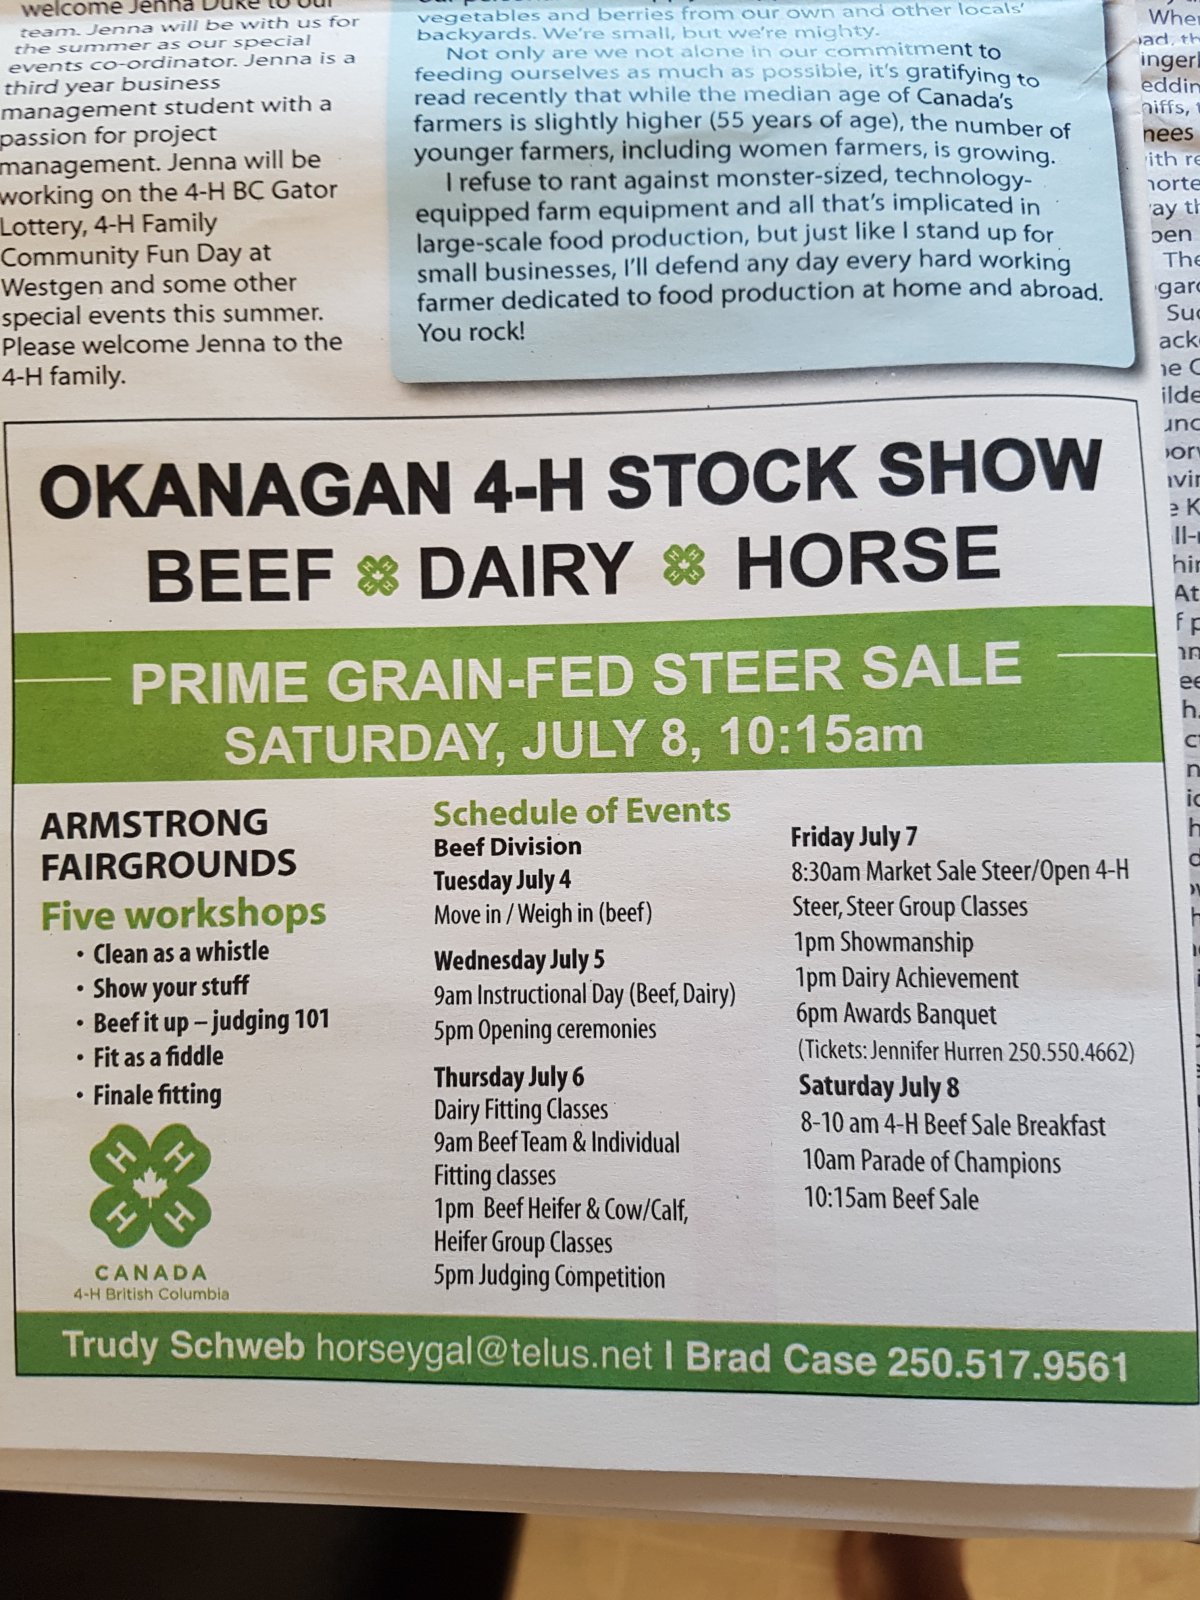 Okanagan 4-H Stock Show and Steer sale - image